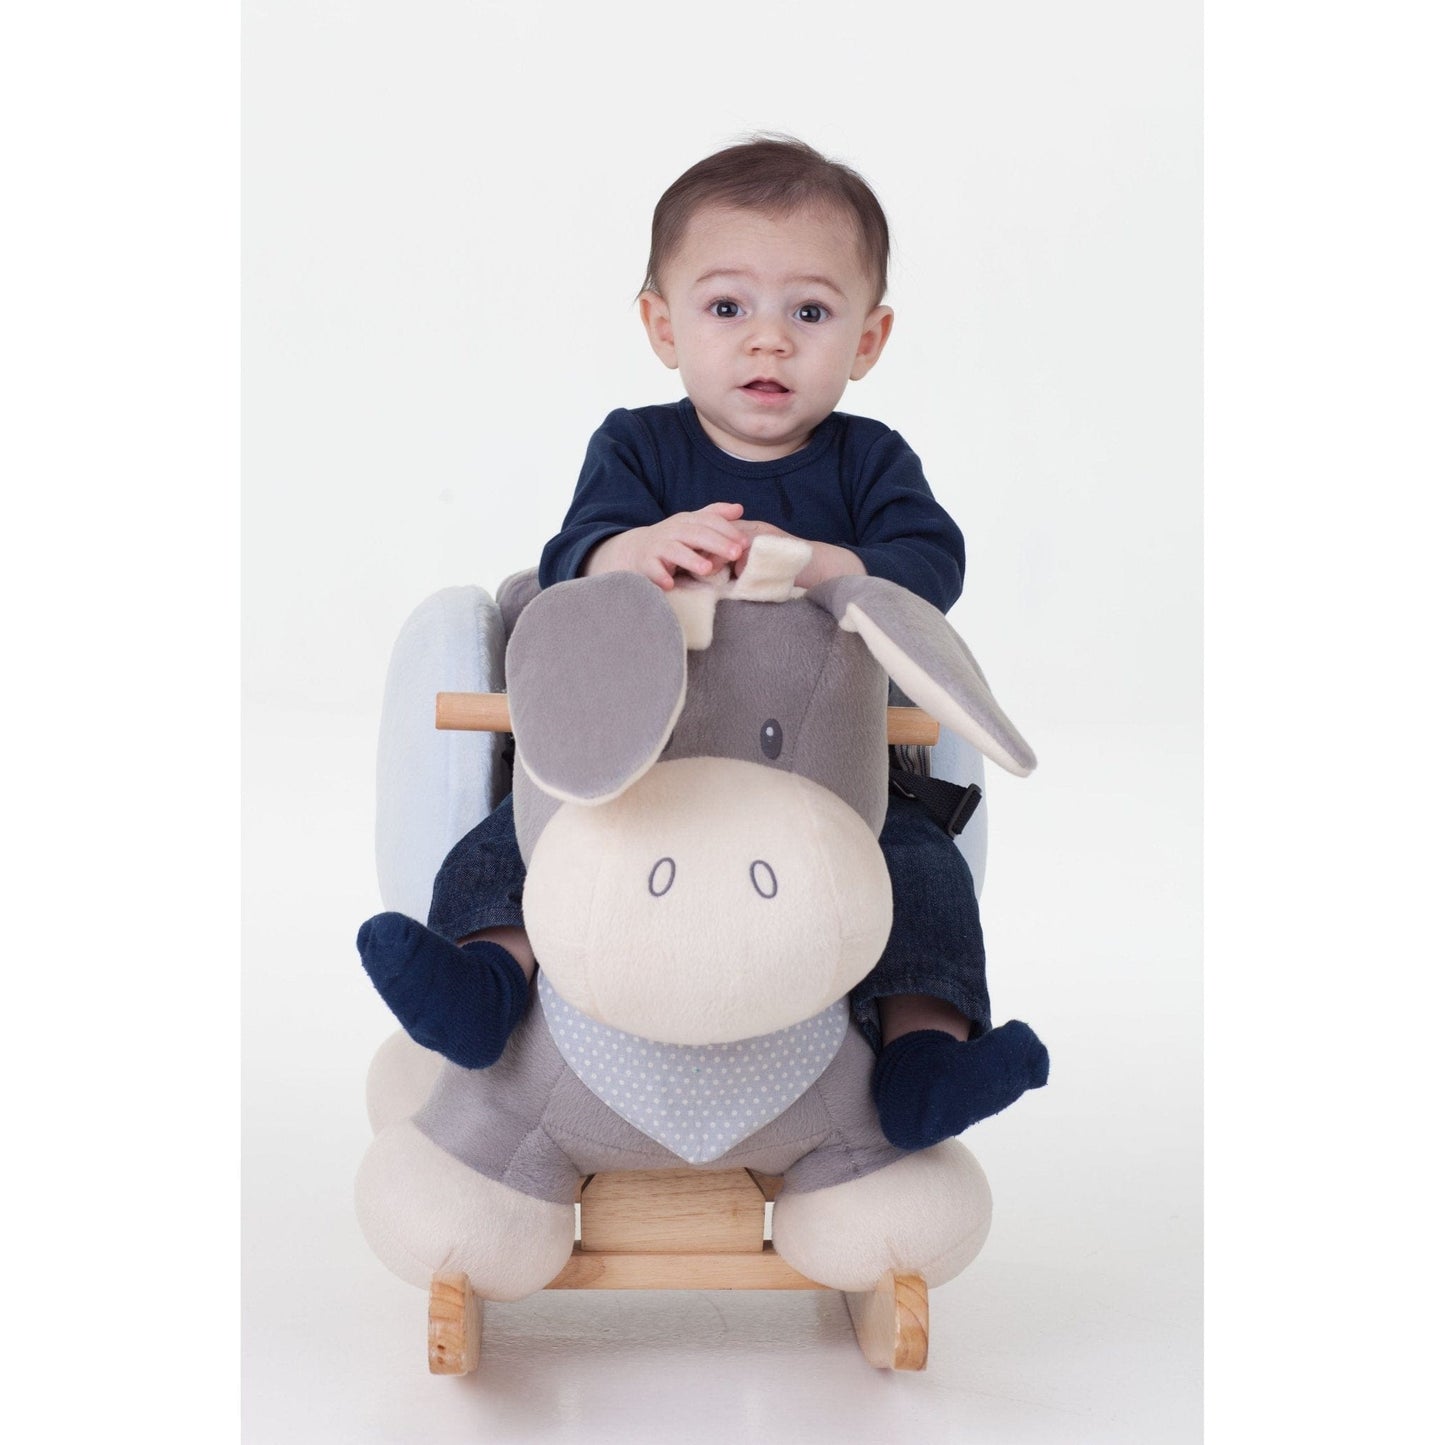 little boy riding Nattou Baby Rocker - Cappuccino Donkey